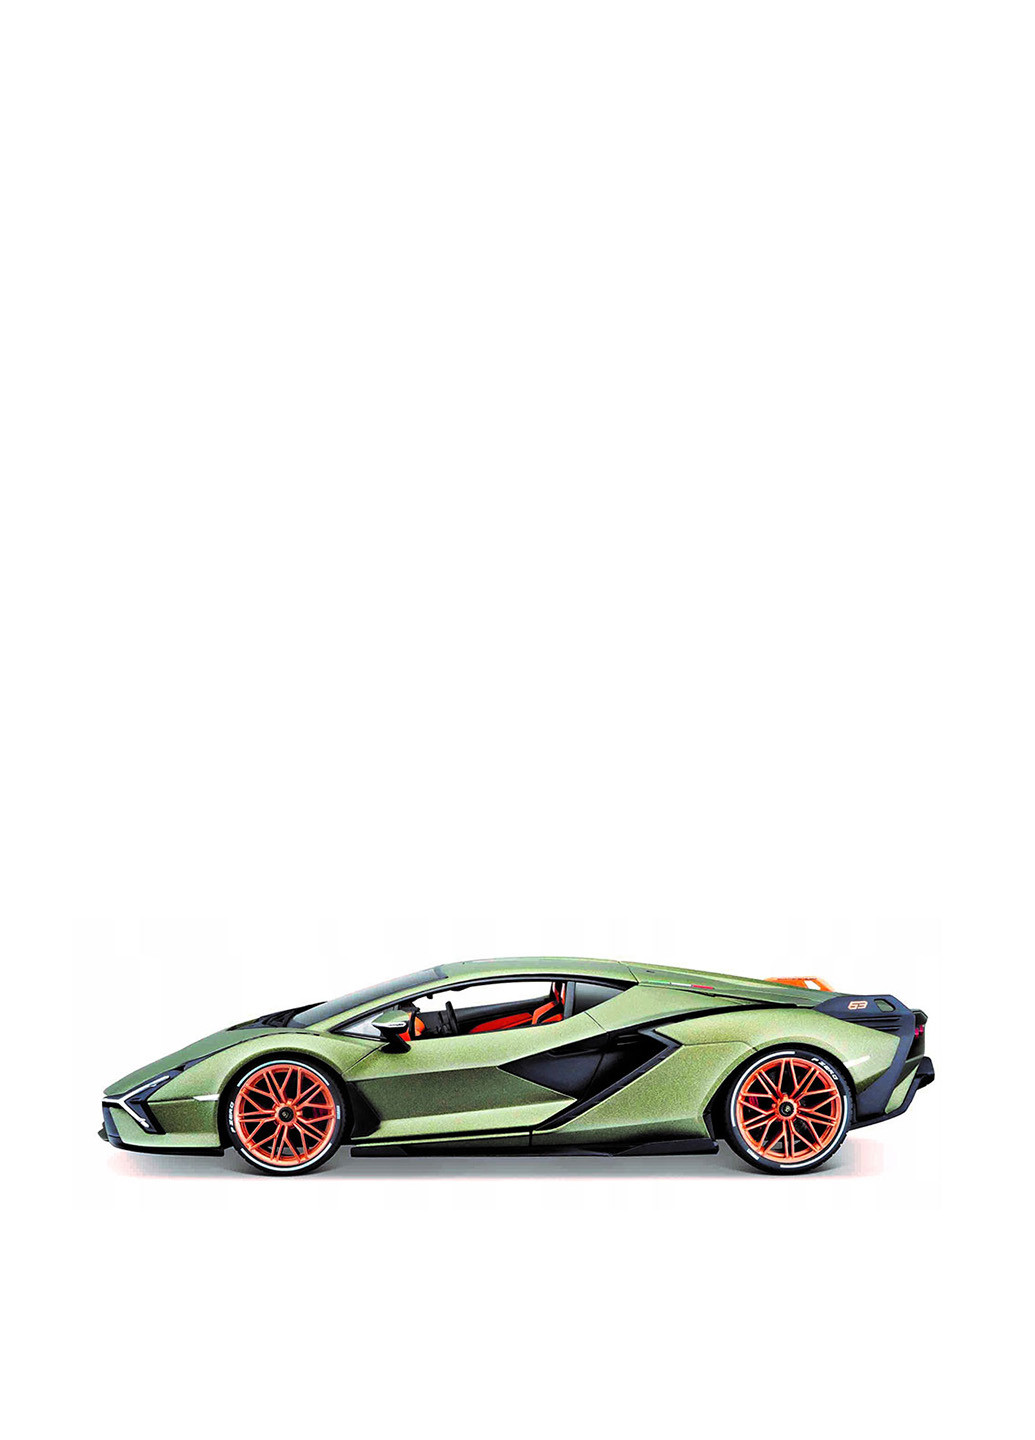 Автомодель Lamborghini Sian FKP 37, 1:18 Bburago (253483838)